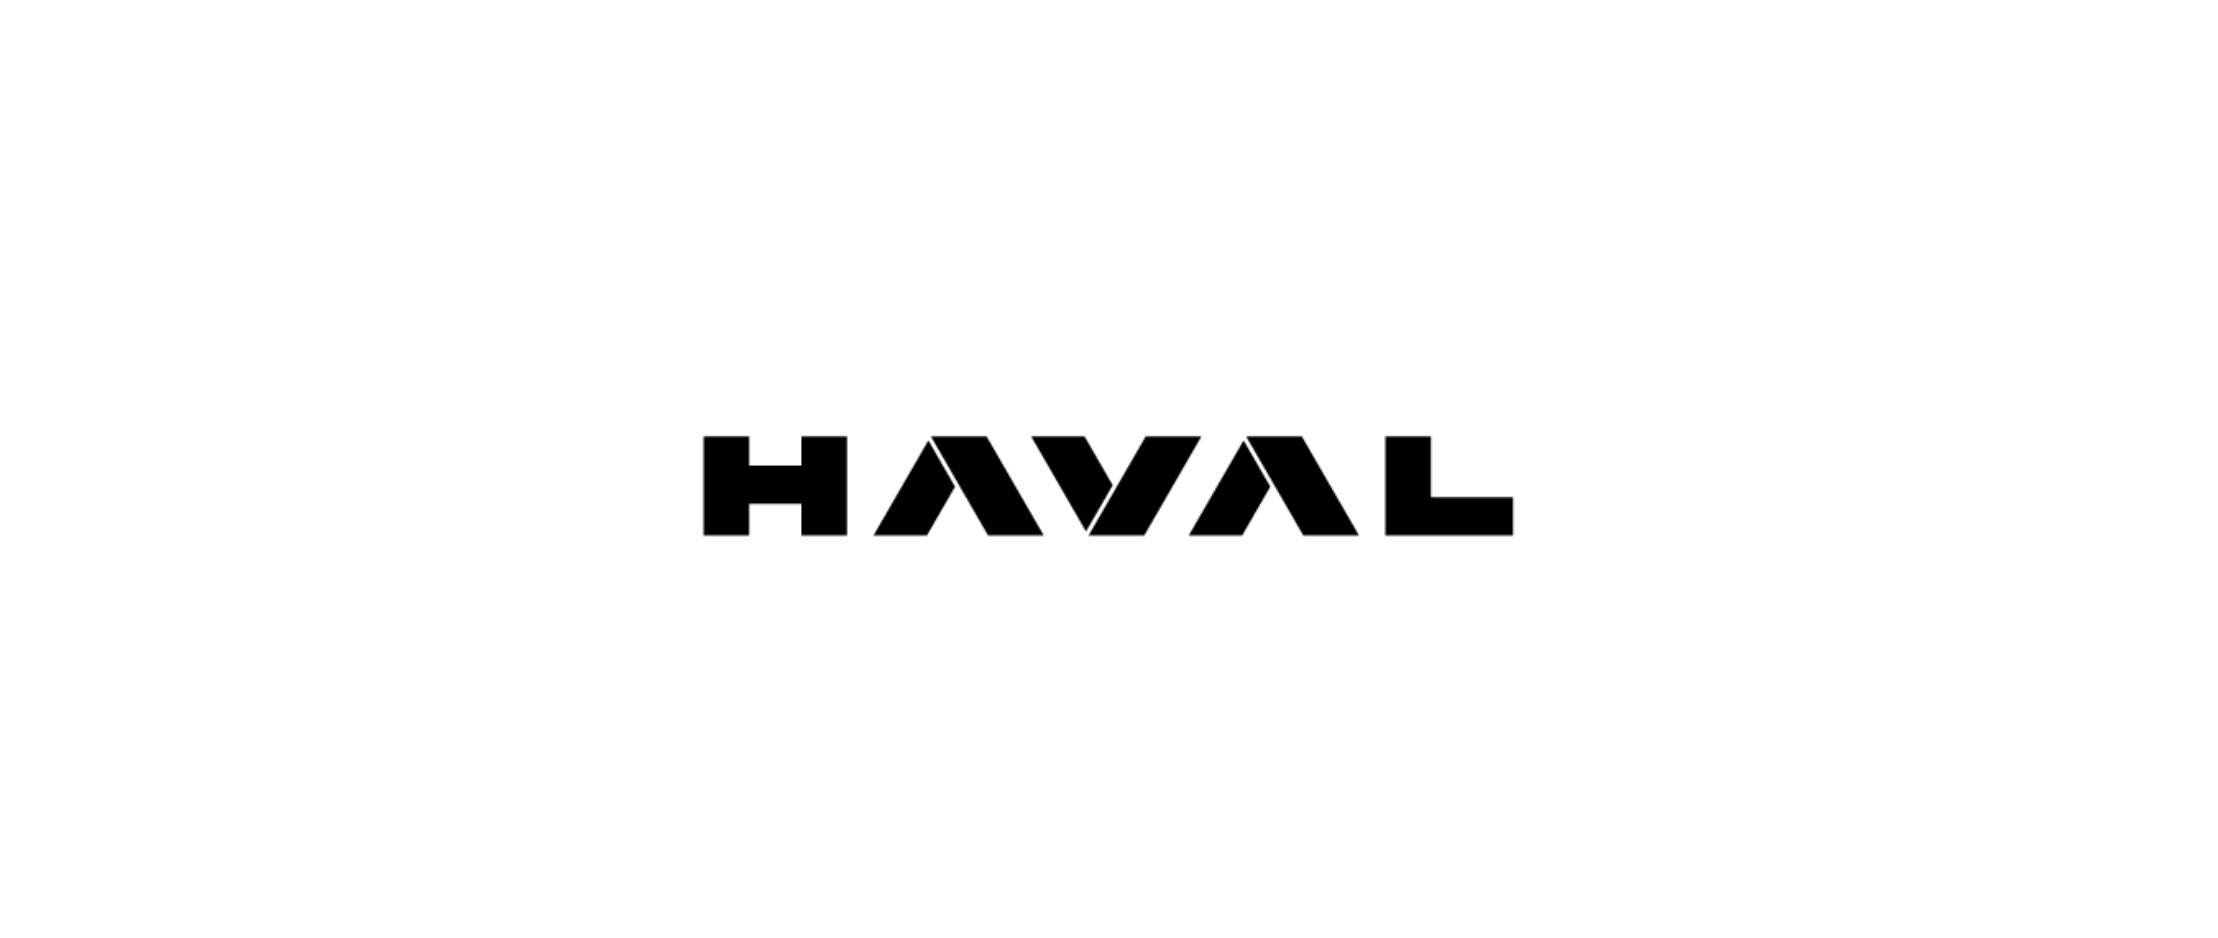 Новый логотип бренда HAVAL